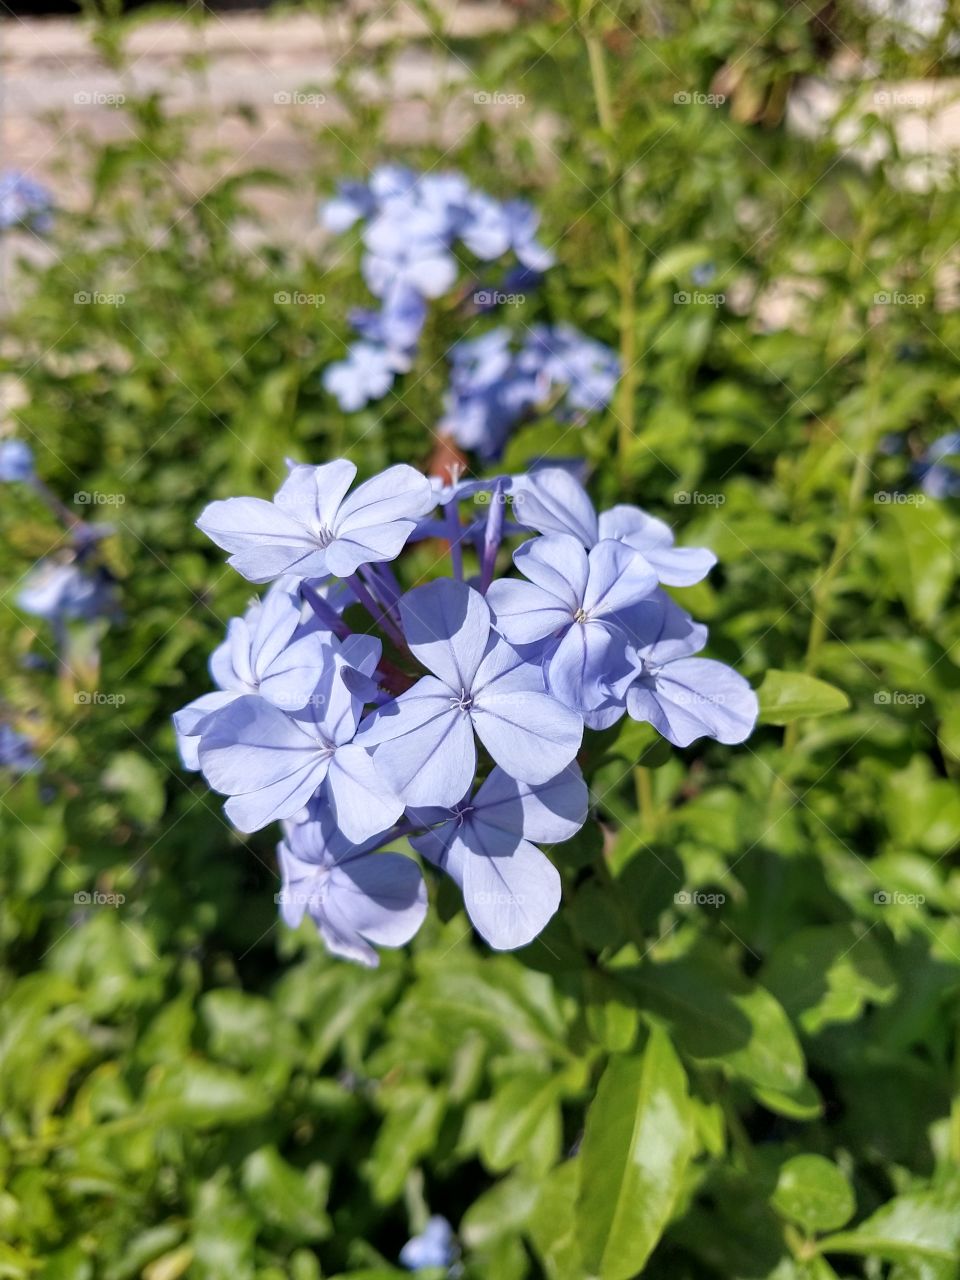 flor
flor azul
flower blue